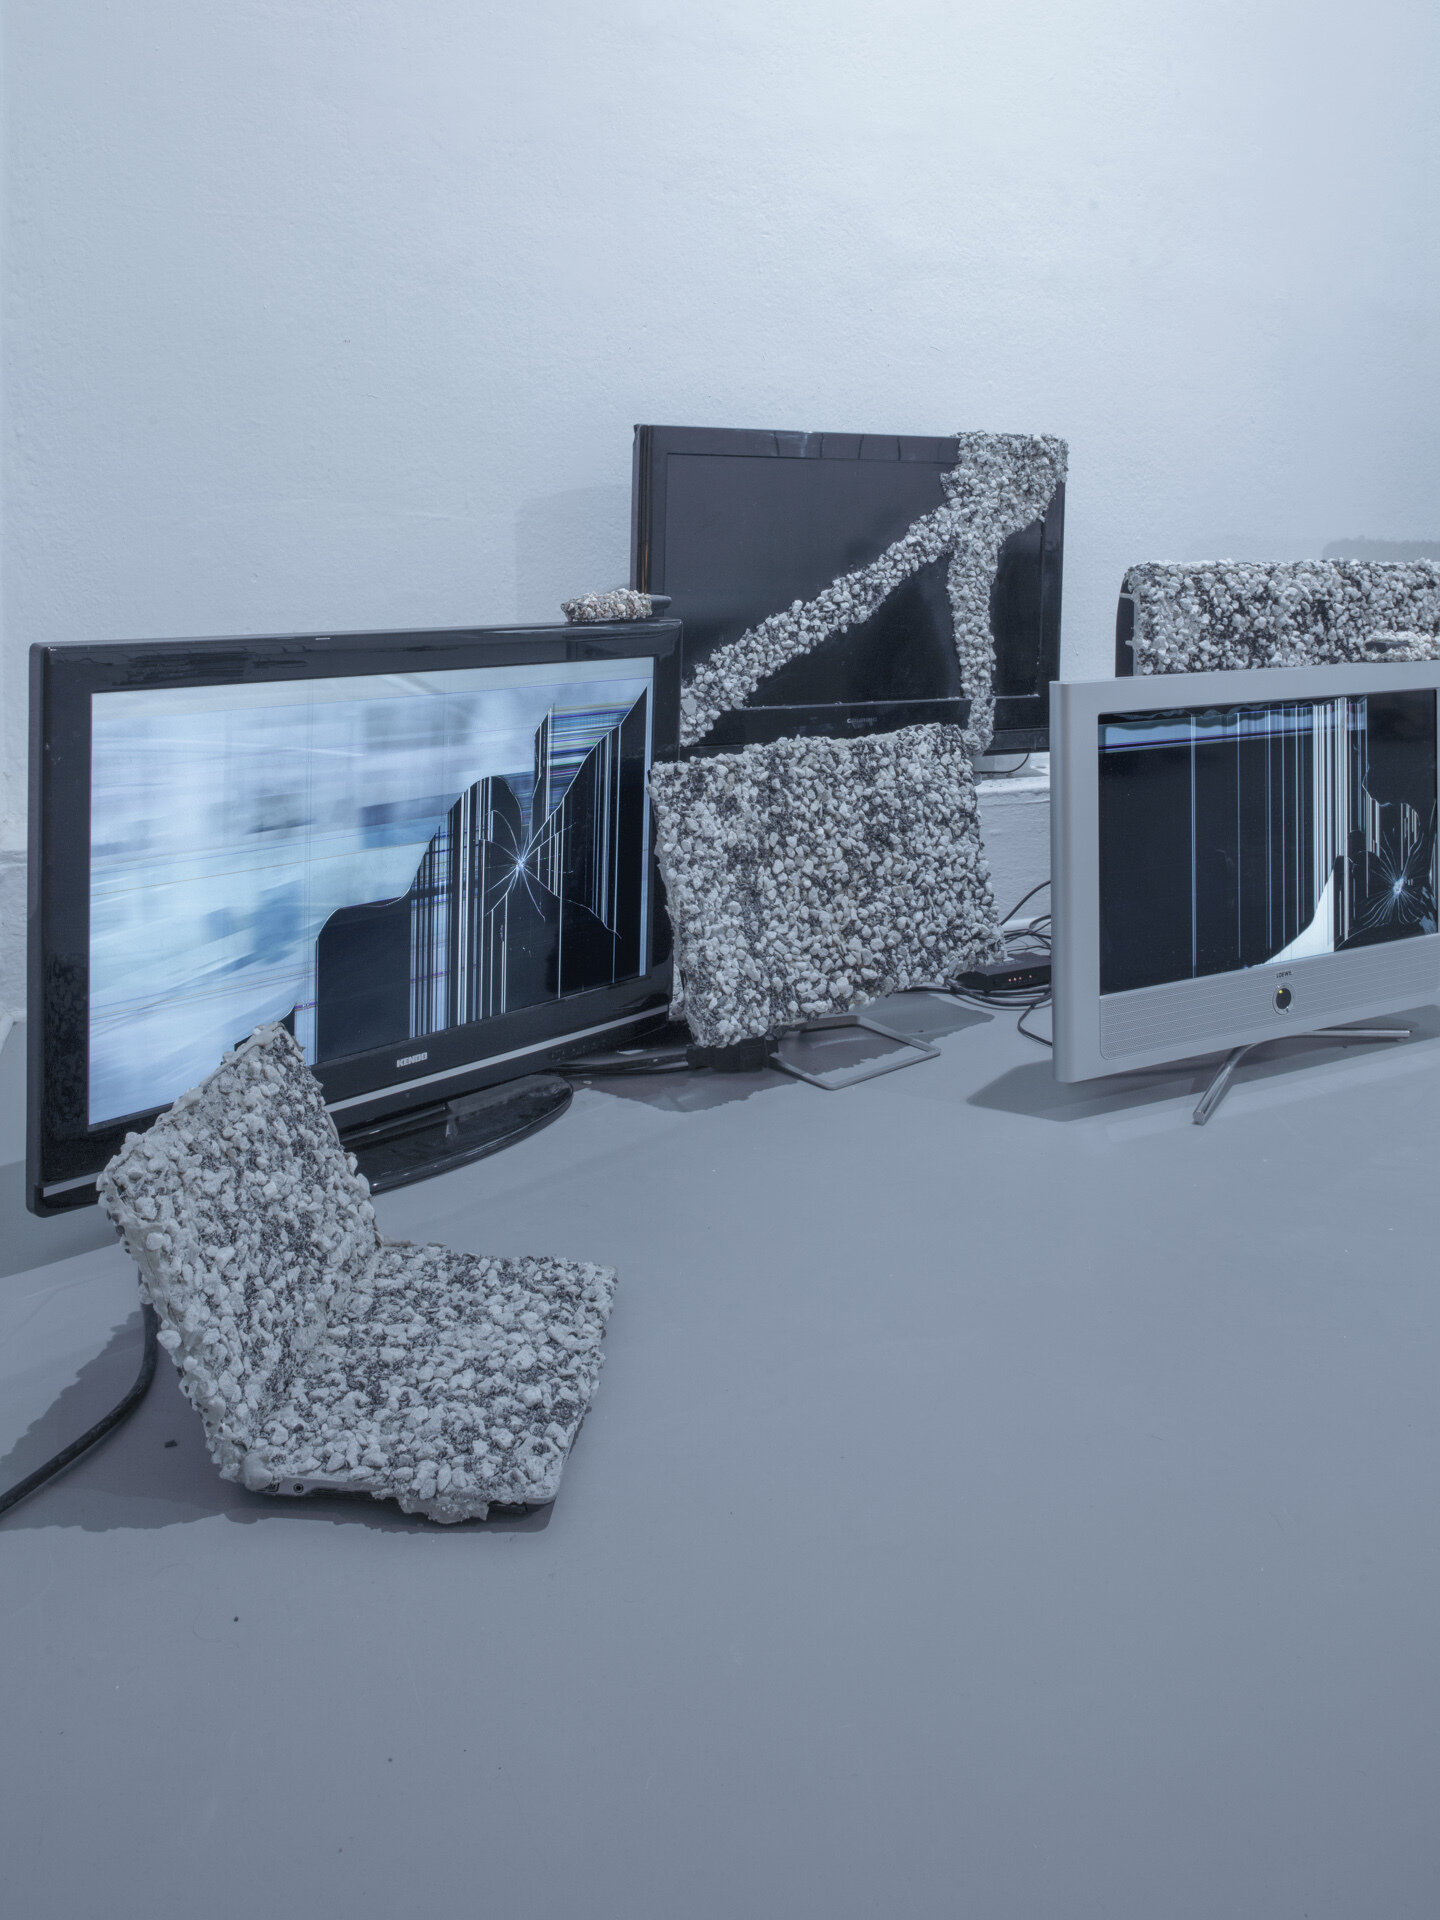  Laura Yuile, Heavy View, 2020, Installation – still  (c) theta.cool 